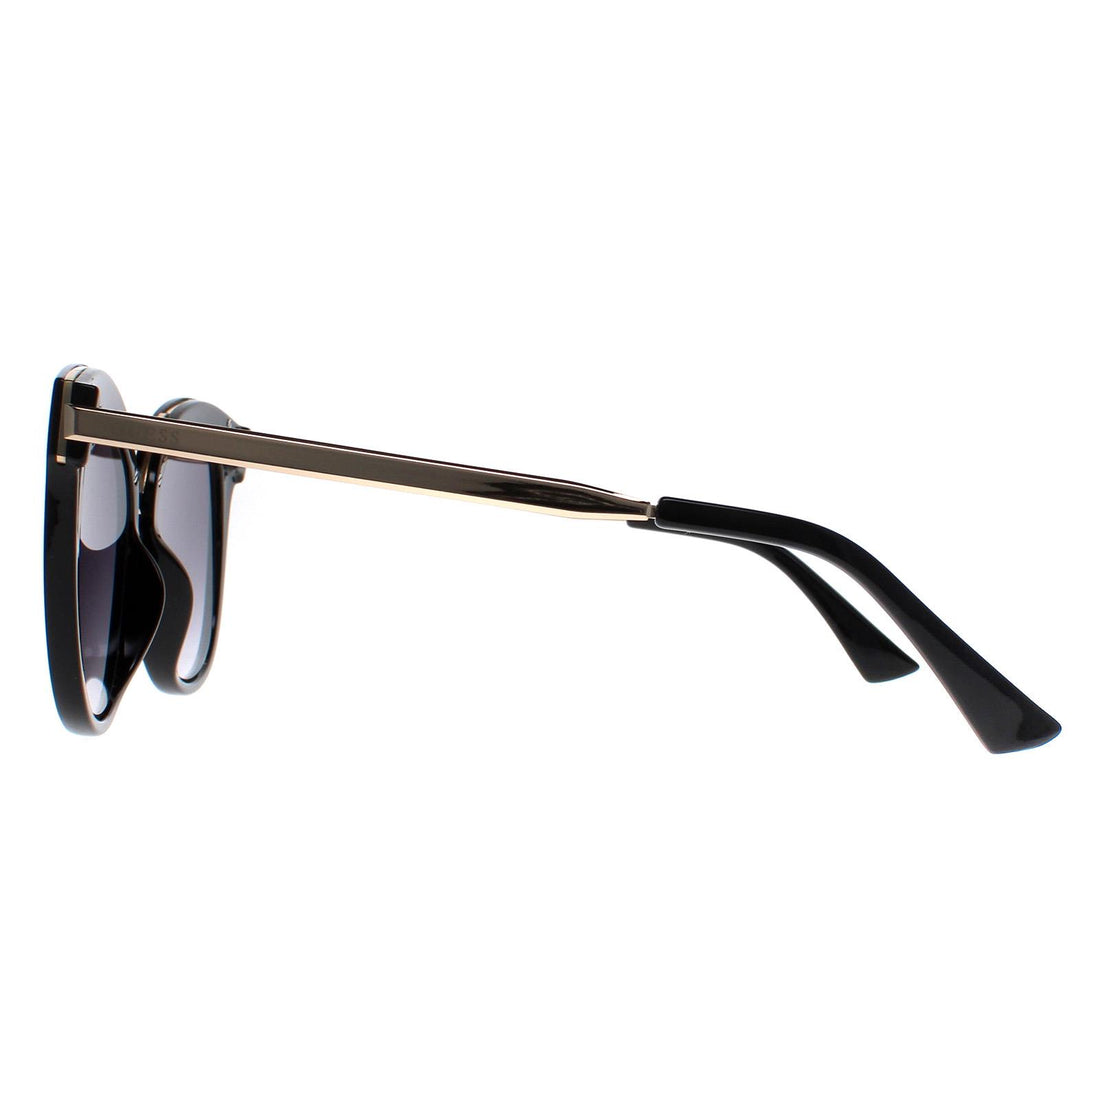 Guess Sunglasses GF0304 01C Black Grey Gradient